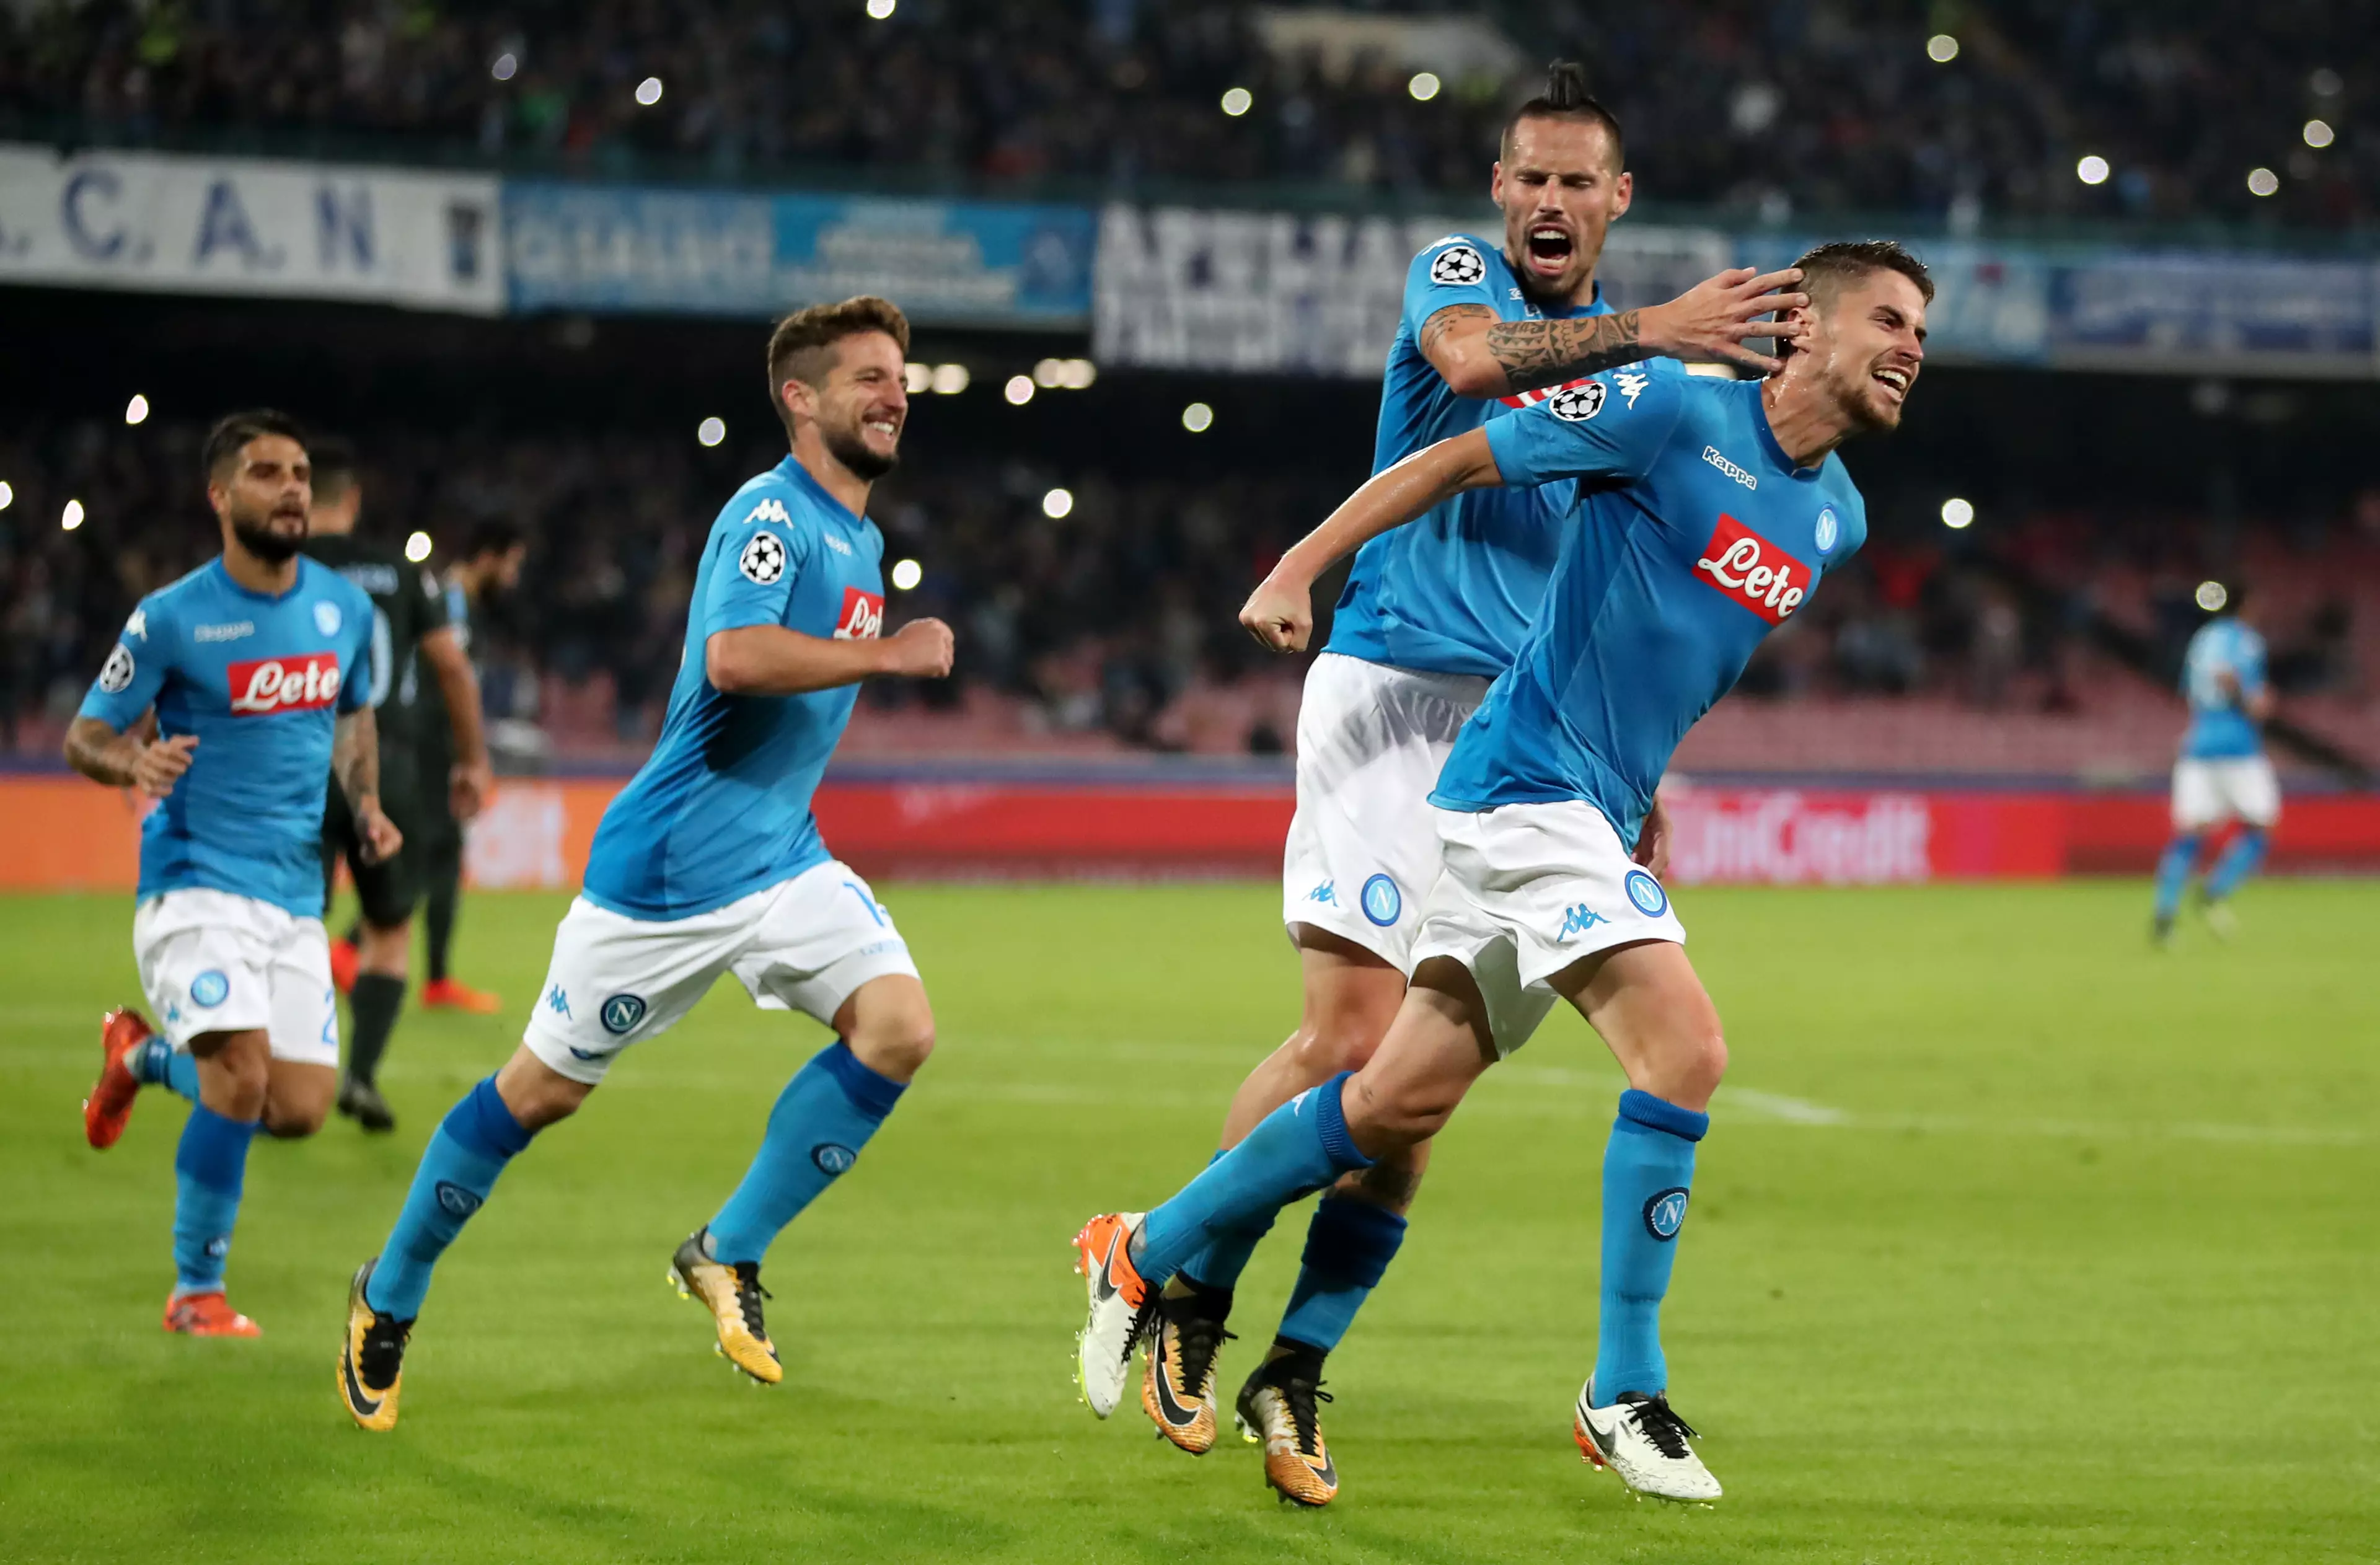 Jorginho celebrates scoring a goal for Napoli. Image: PA